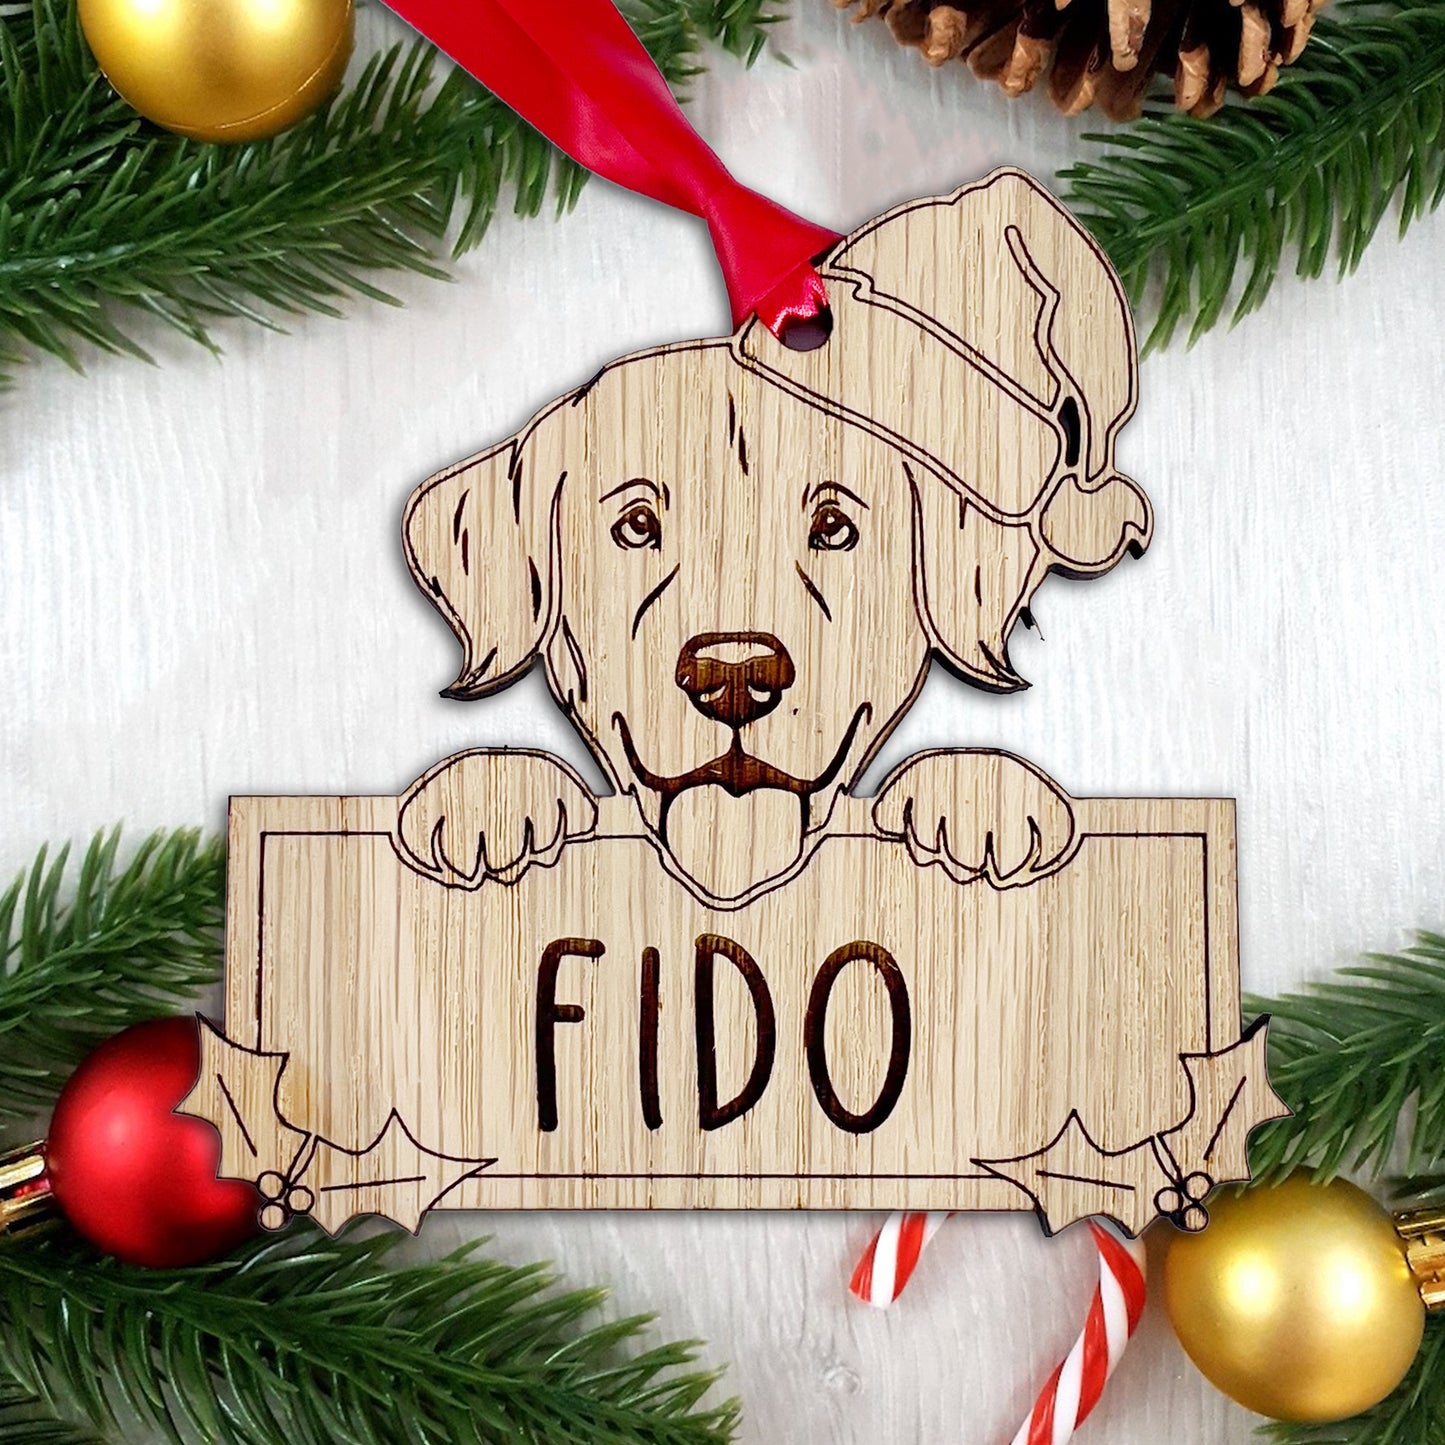 Personalised Golden Retriever Dog Bauble - Peeking Dog - Oak Veneer Wood - Add your own name!